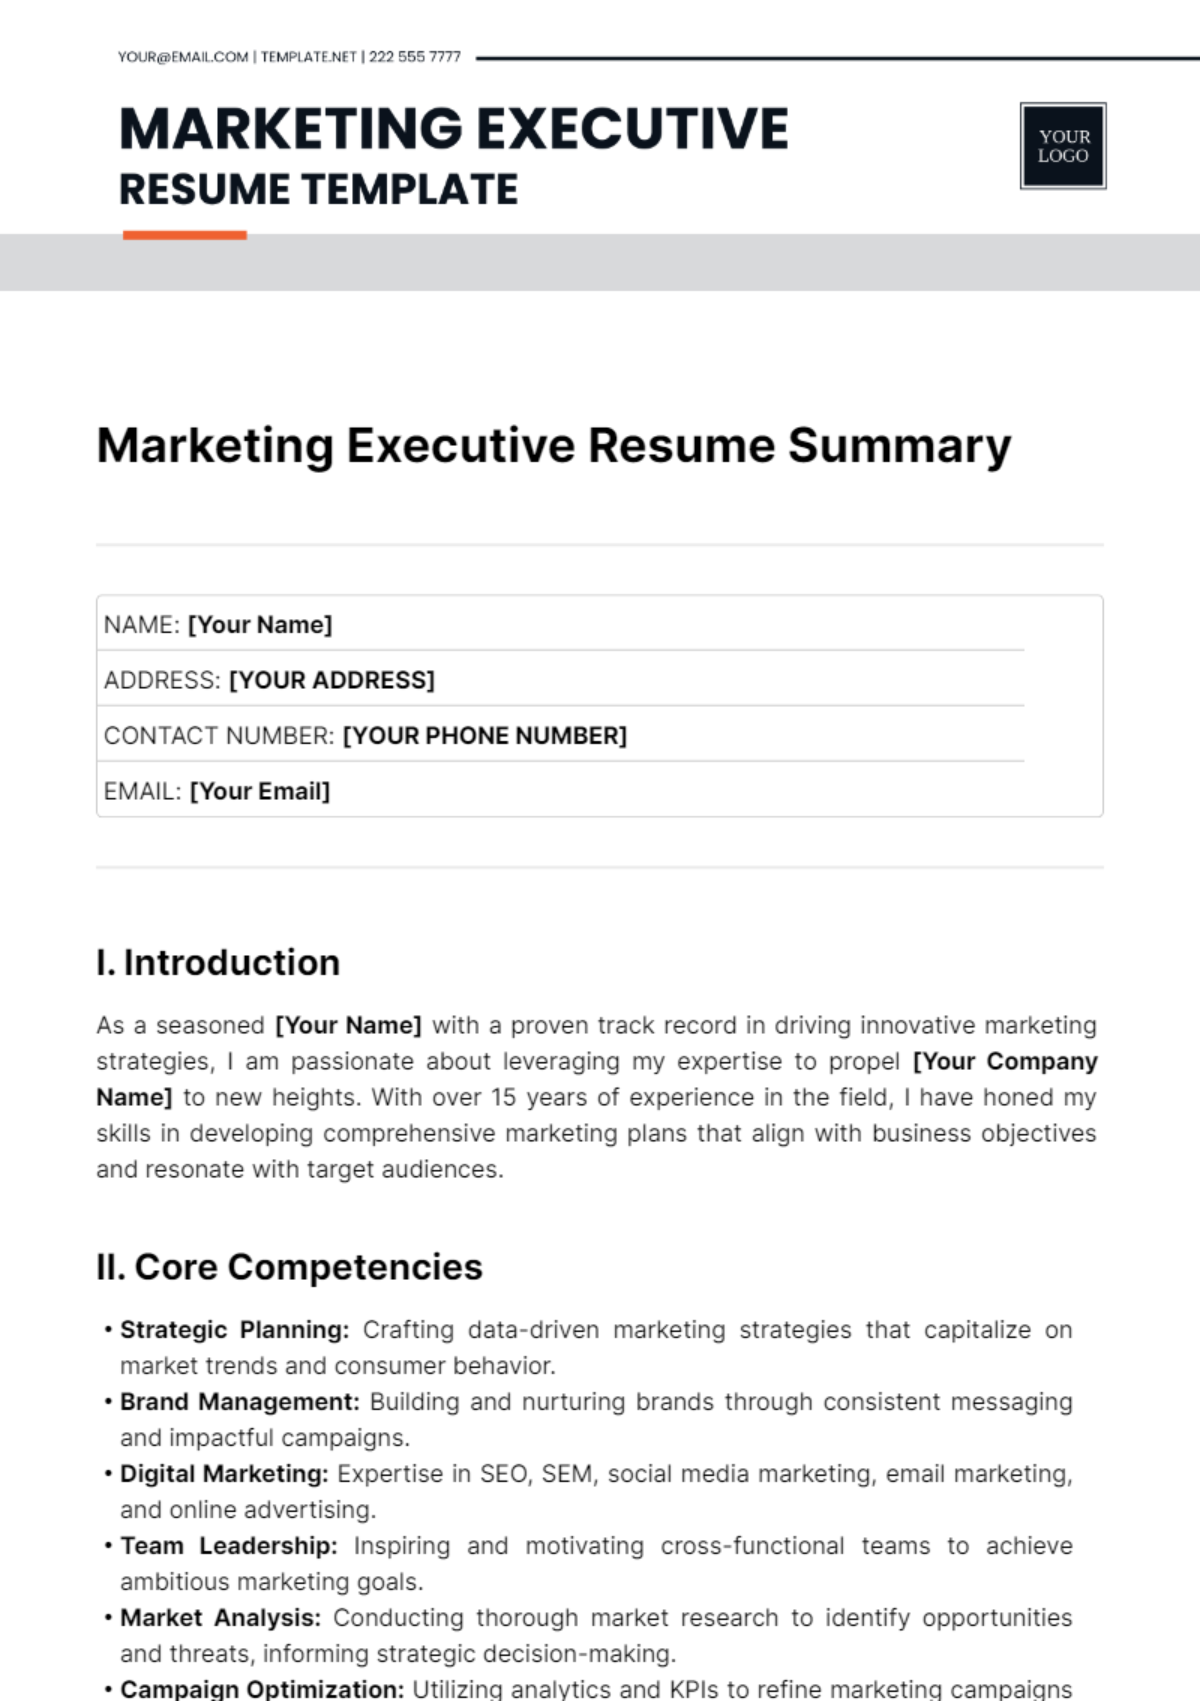 Marketing Executive Resume Summary Template